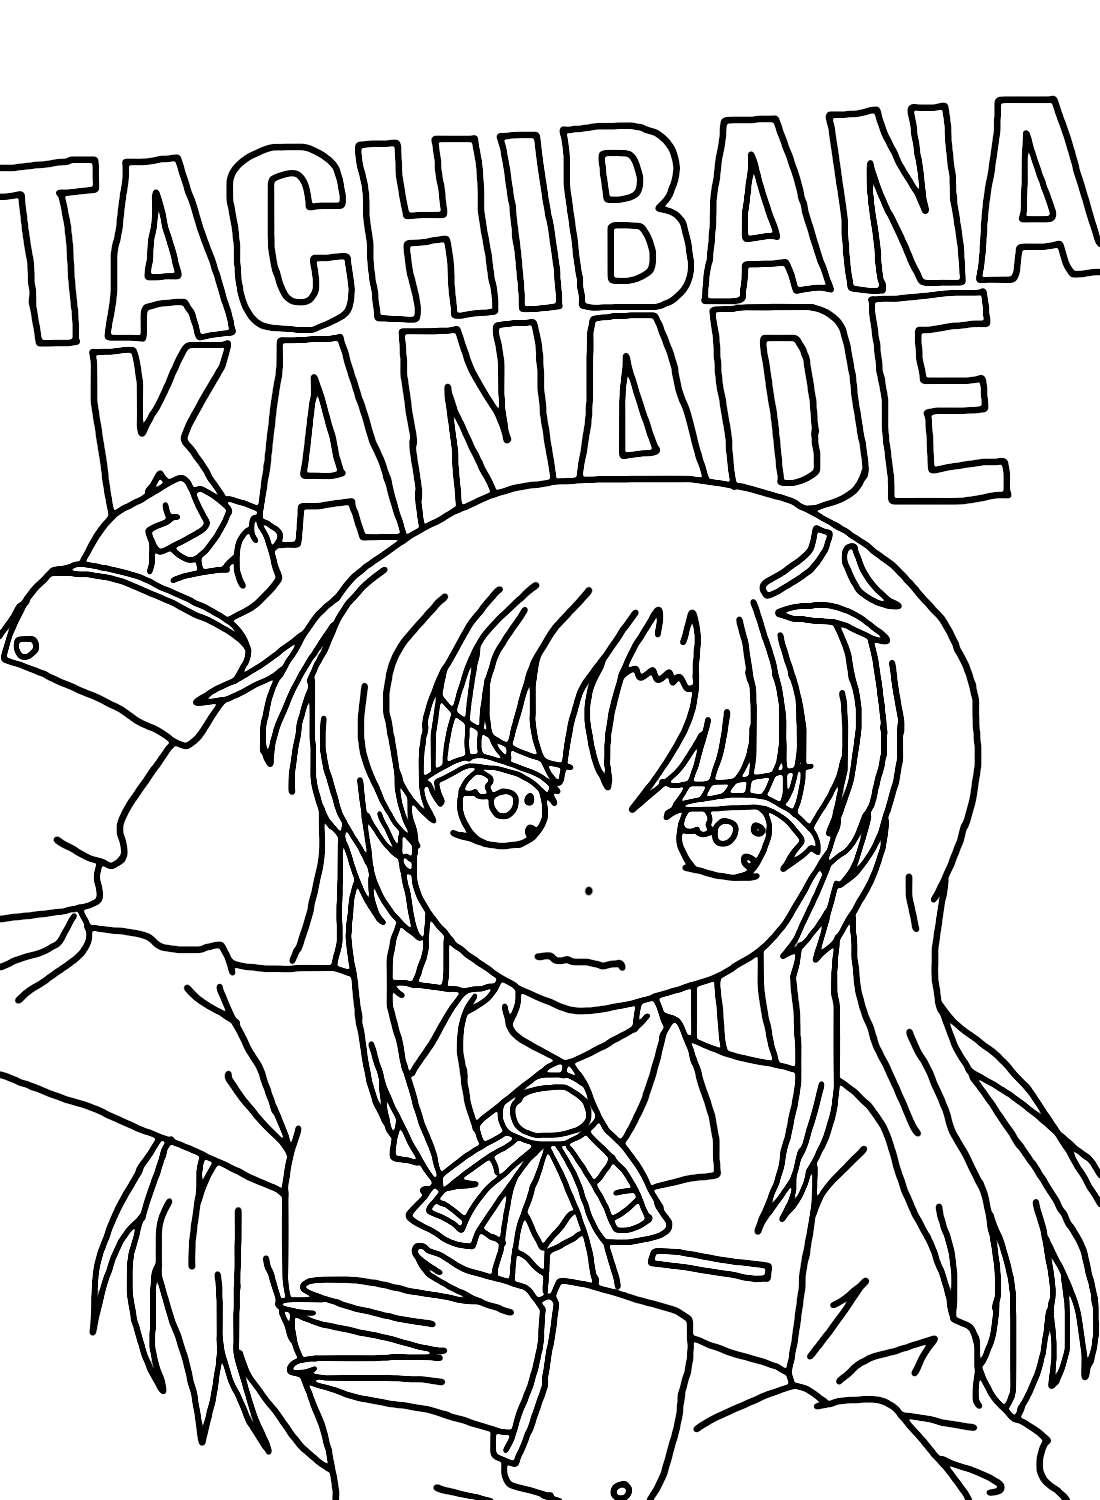 Página para colorir de Tachibana Kanade de Kanade Tachibana